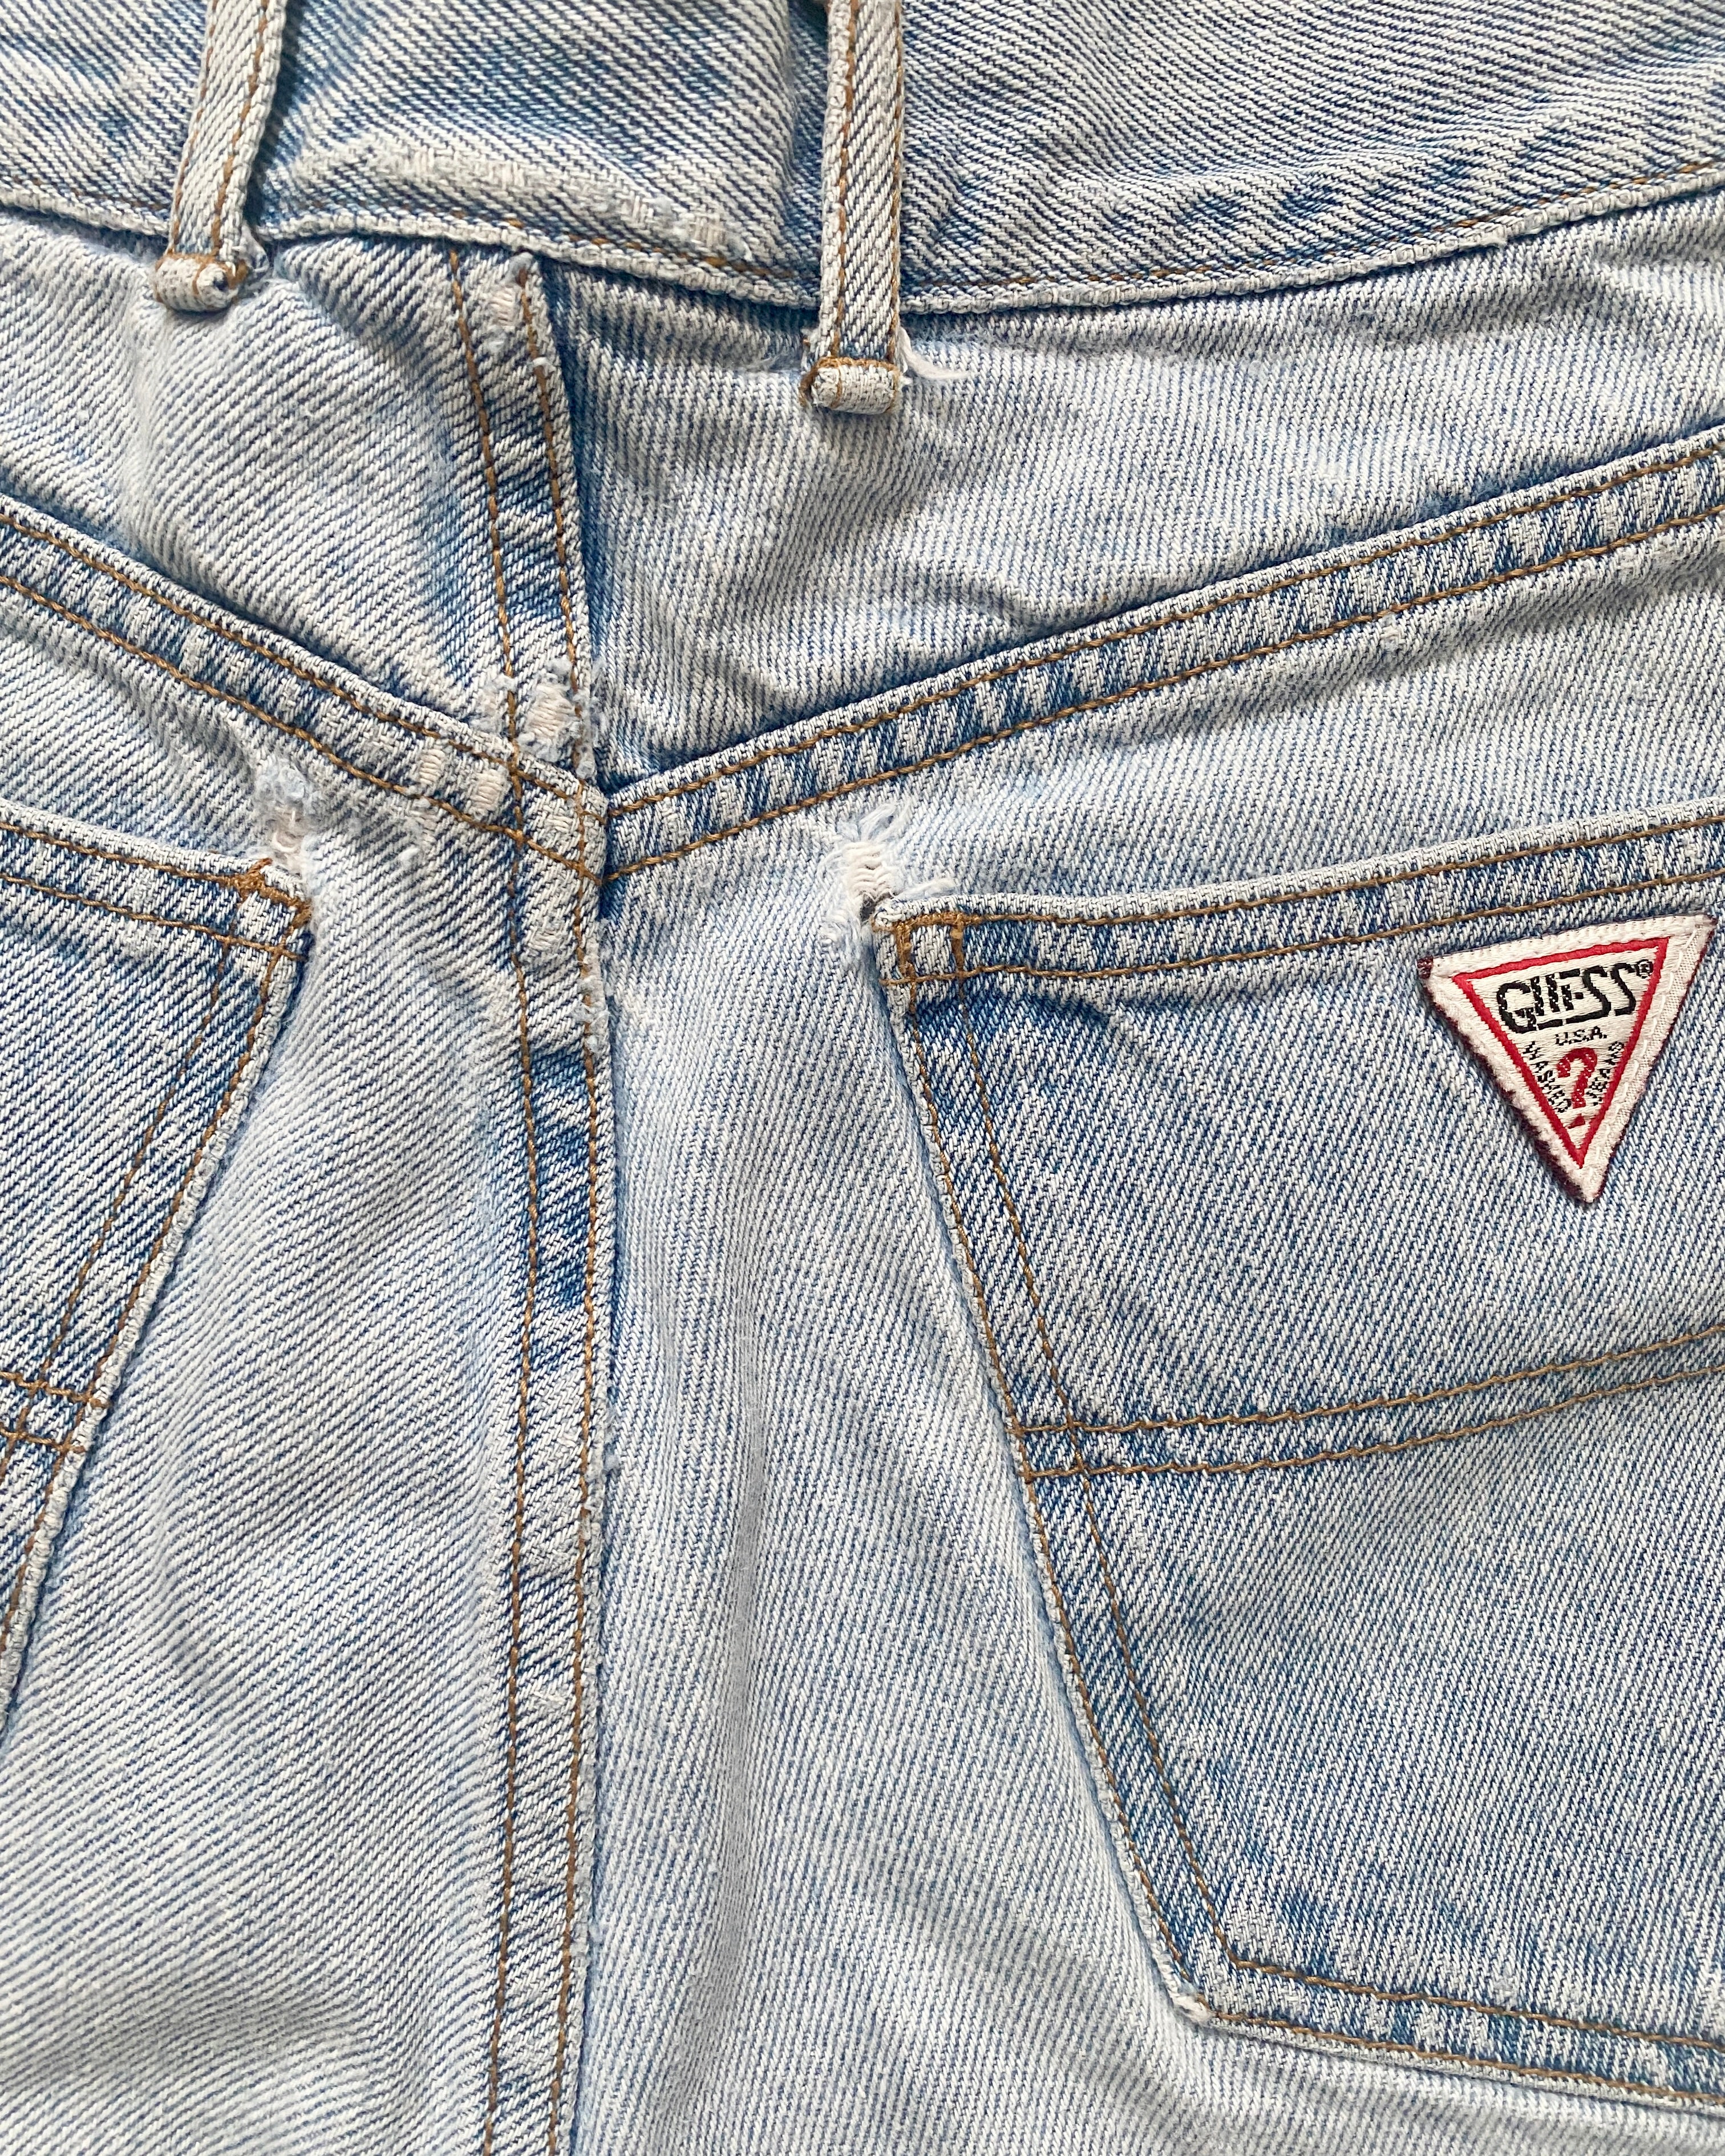 Vintage 1980s GUESS Light Wash Cuffed Denim High Waist Jean Shorts